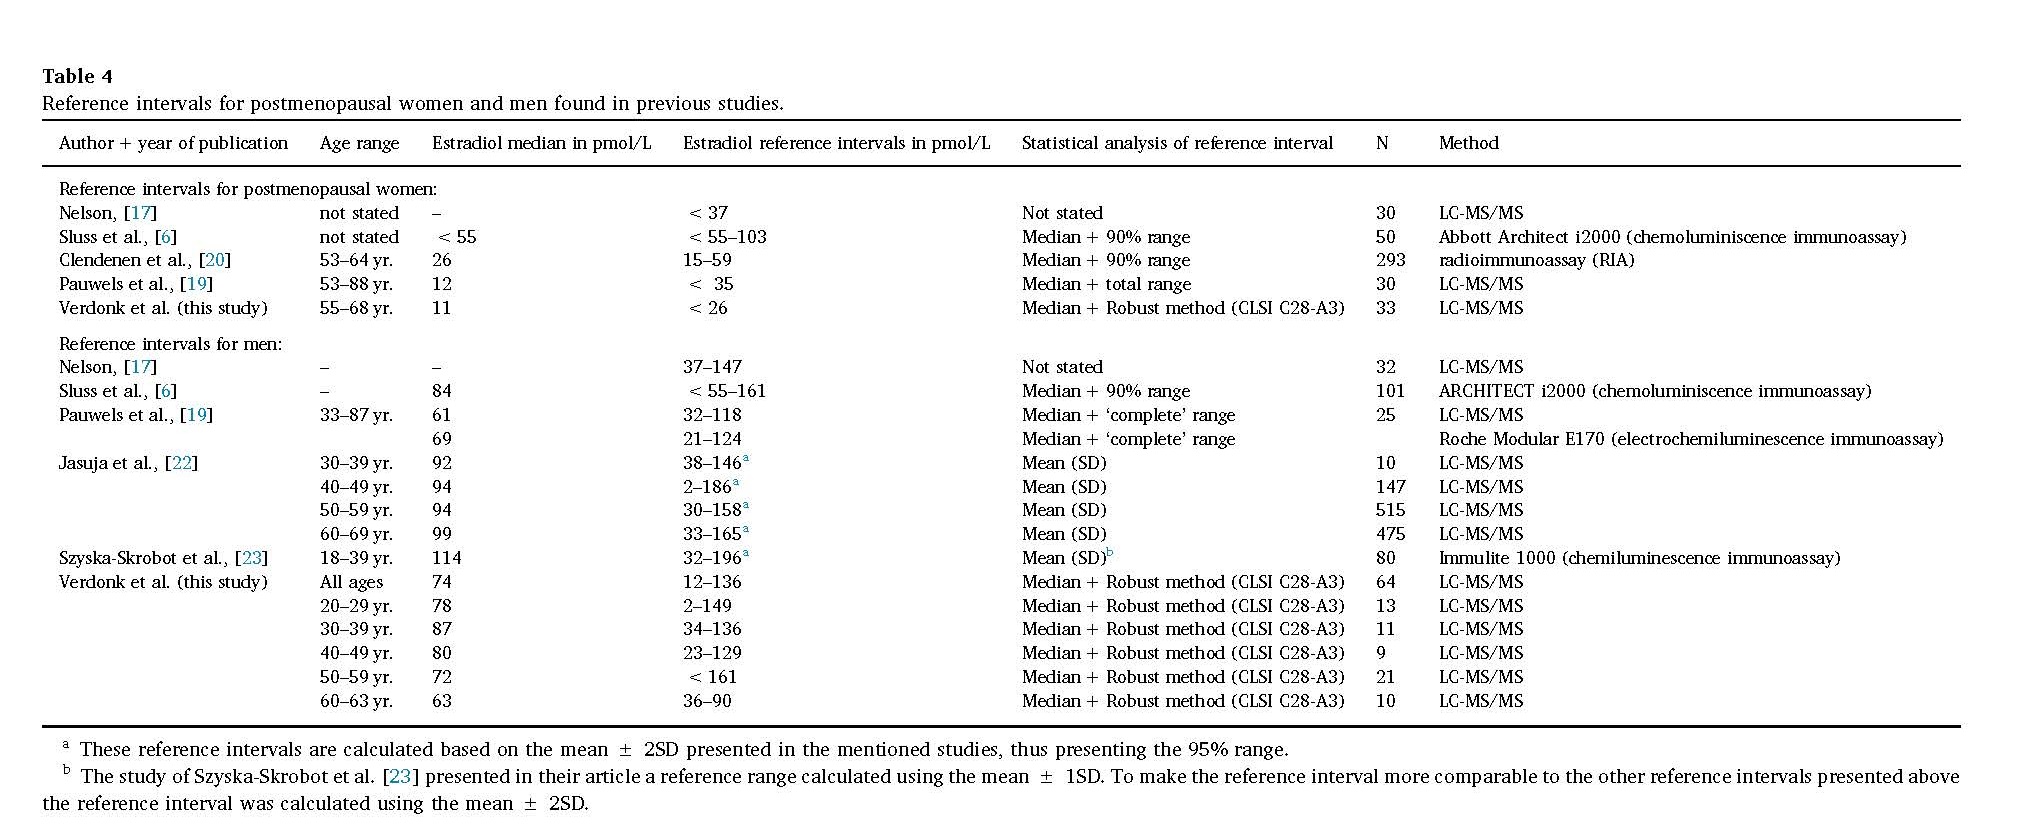 sensitive estradiol ranges in postmenopausal women and men.jpg